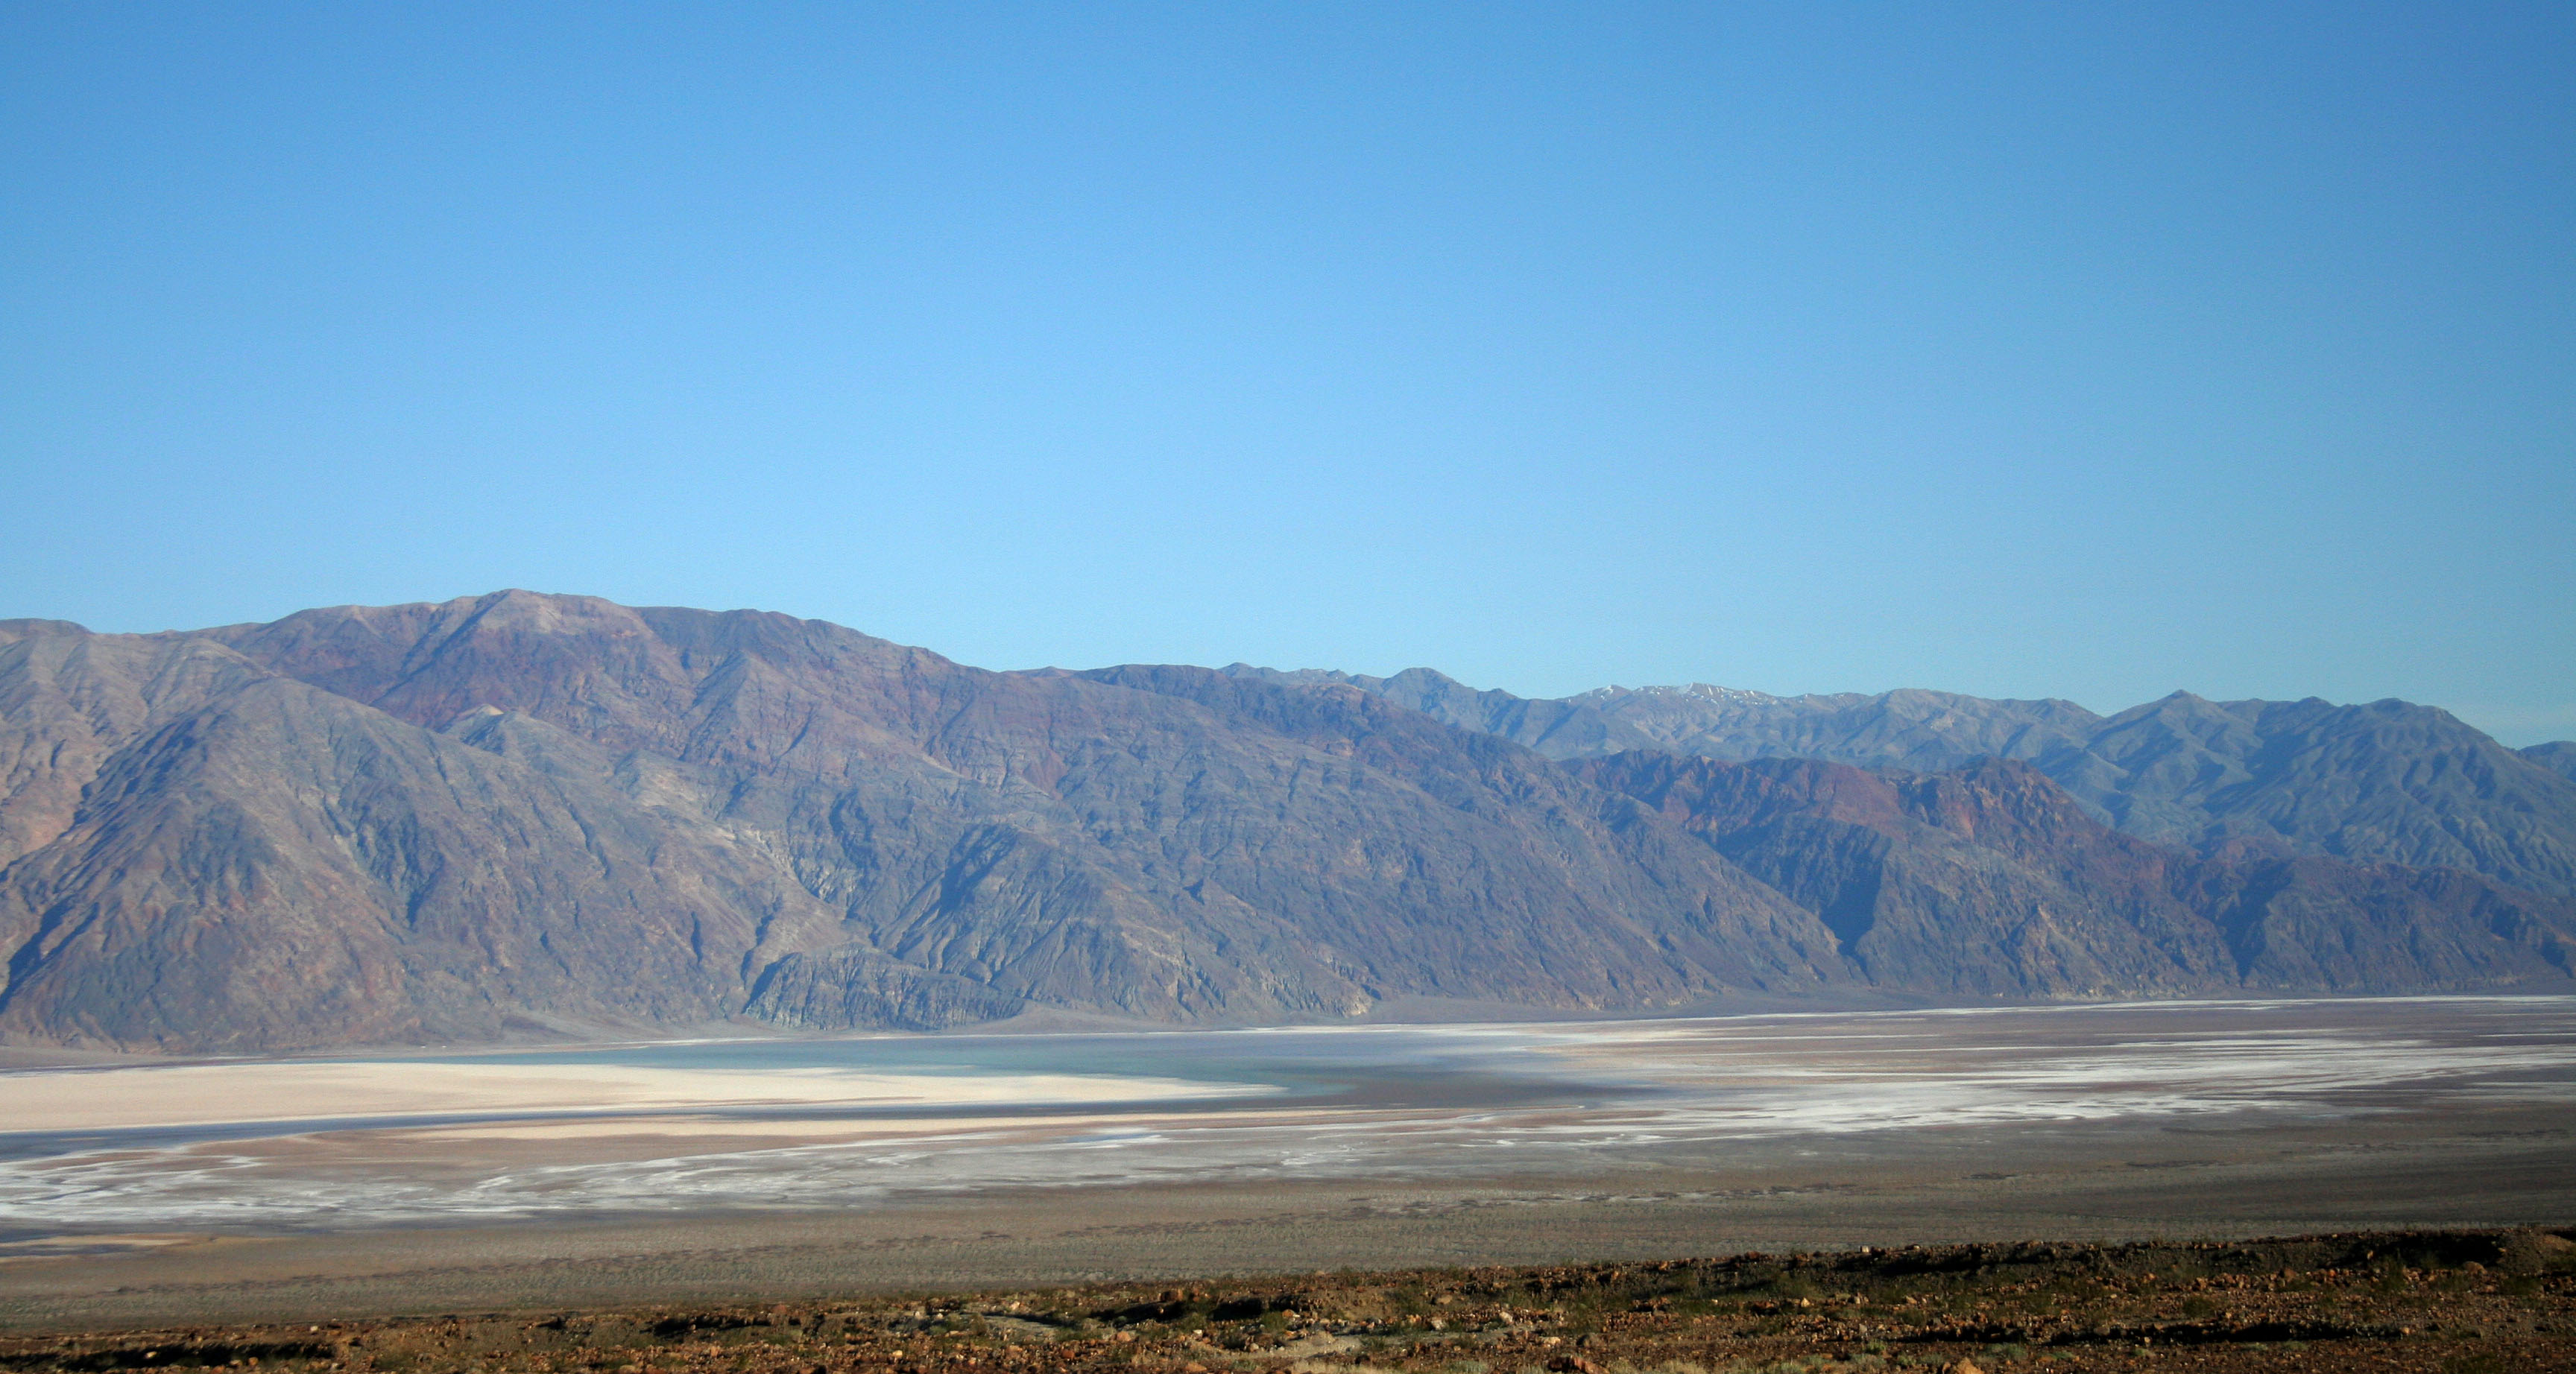 Death Valley (4528)